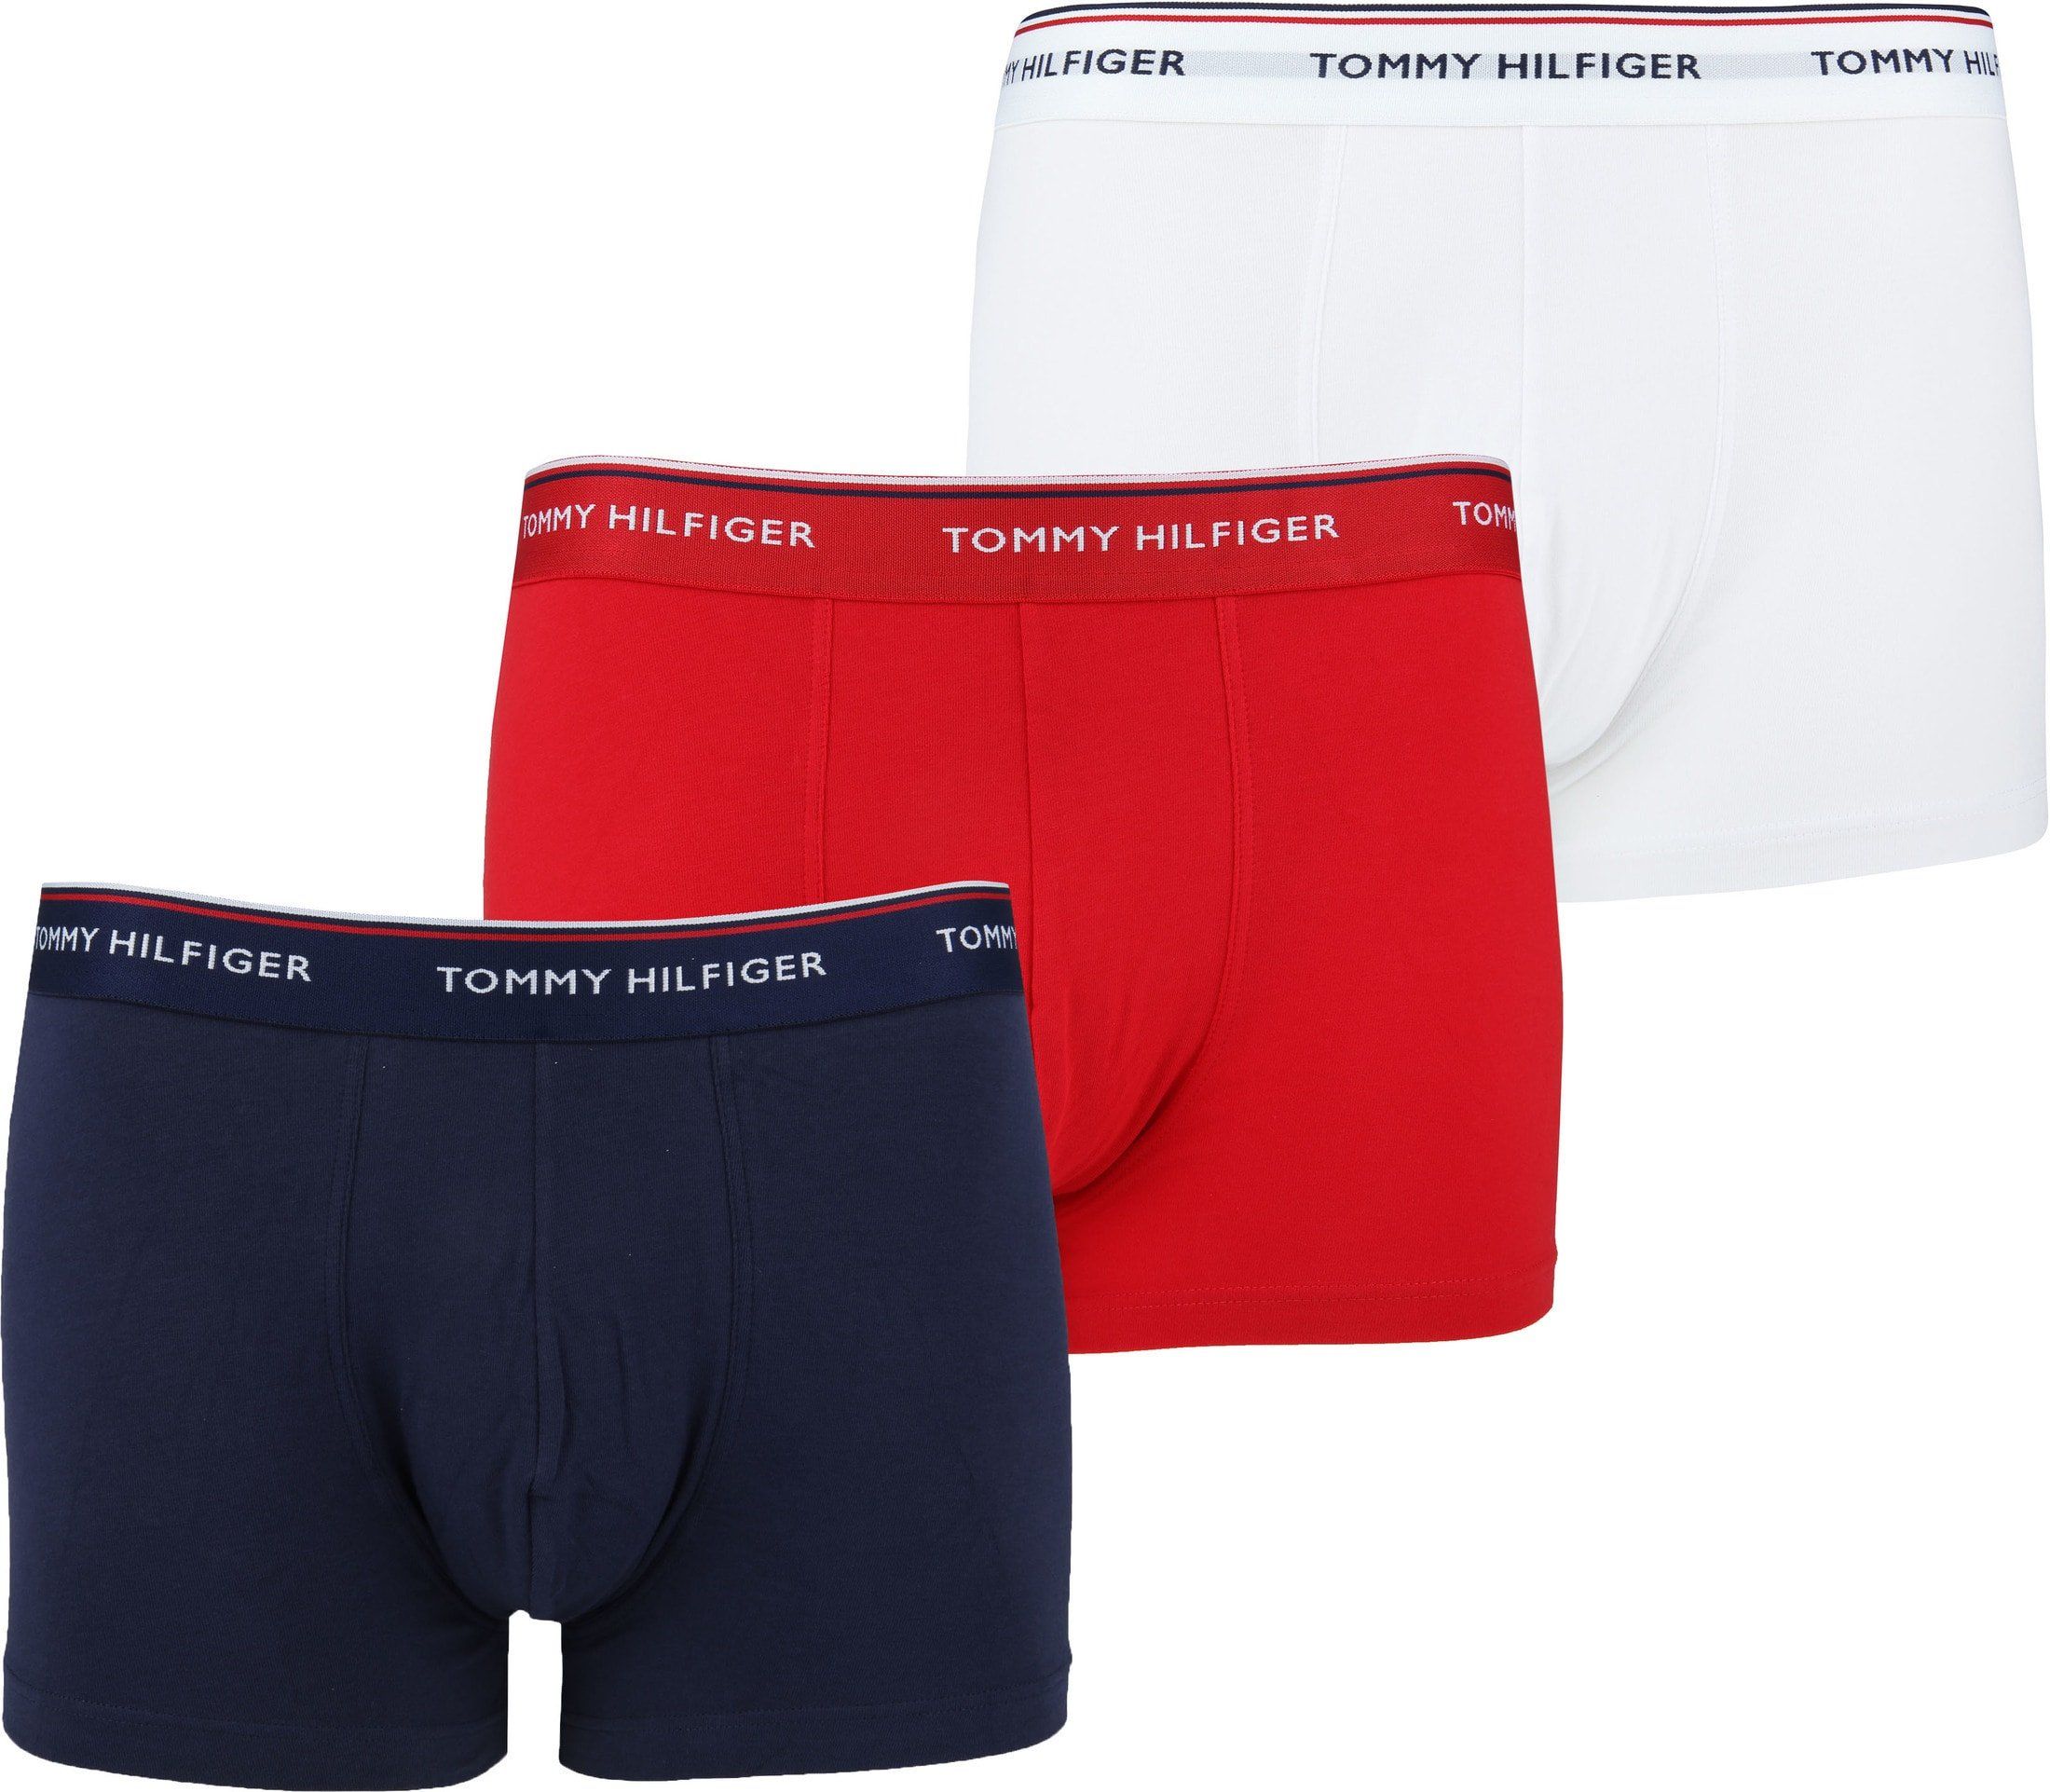 Tommy Hilfiger Boxershorts 3-Pack Trunk Multi Dark Blue White Red Blue size L